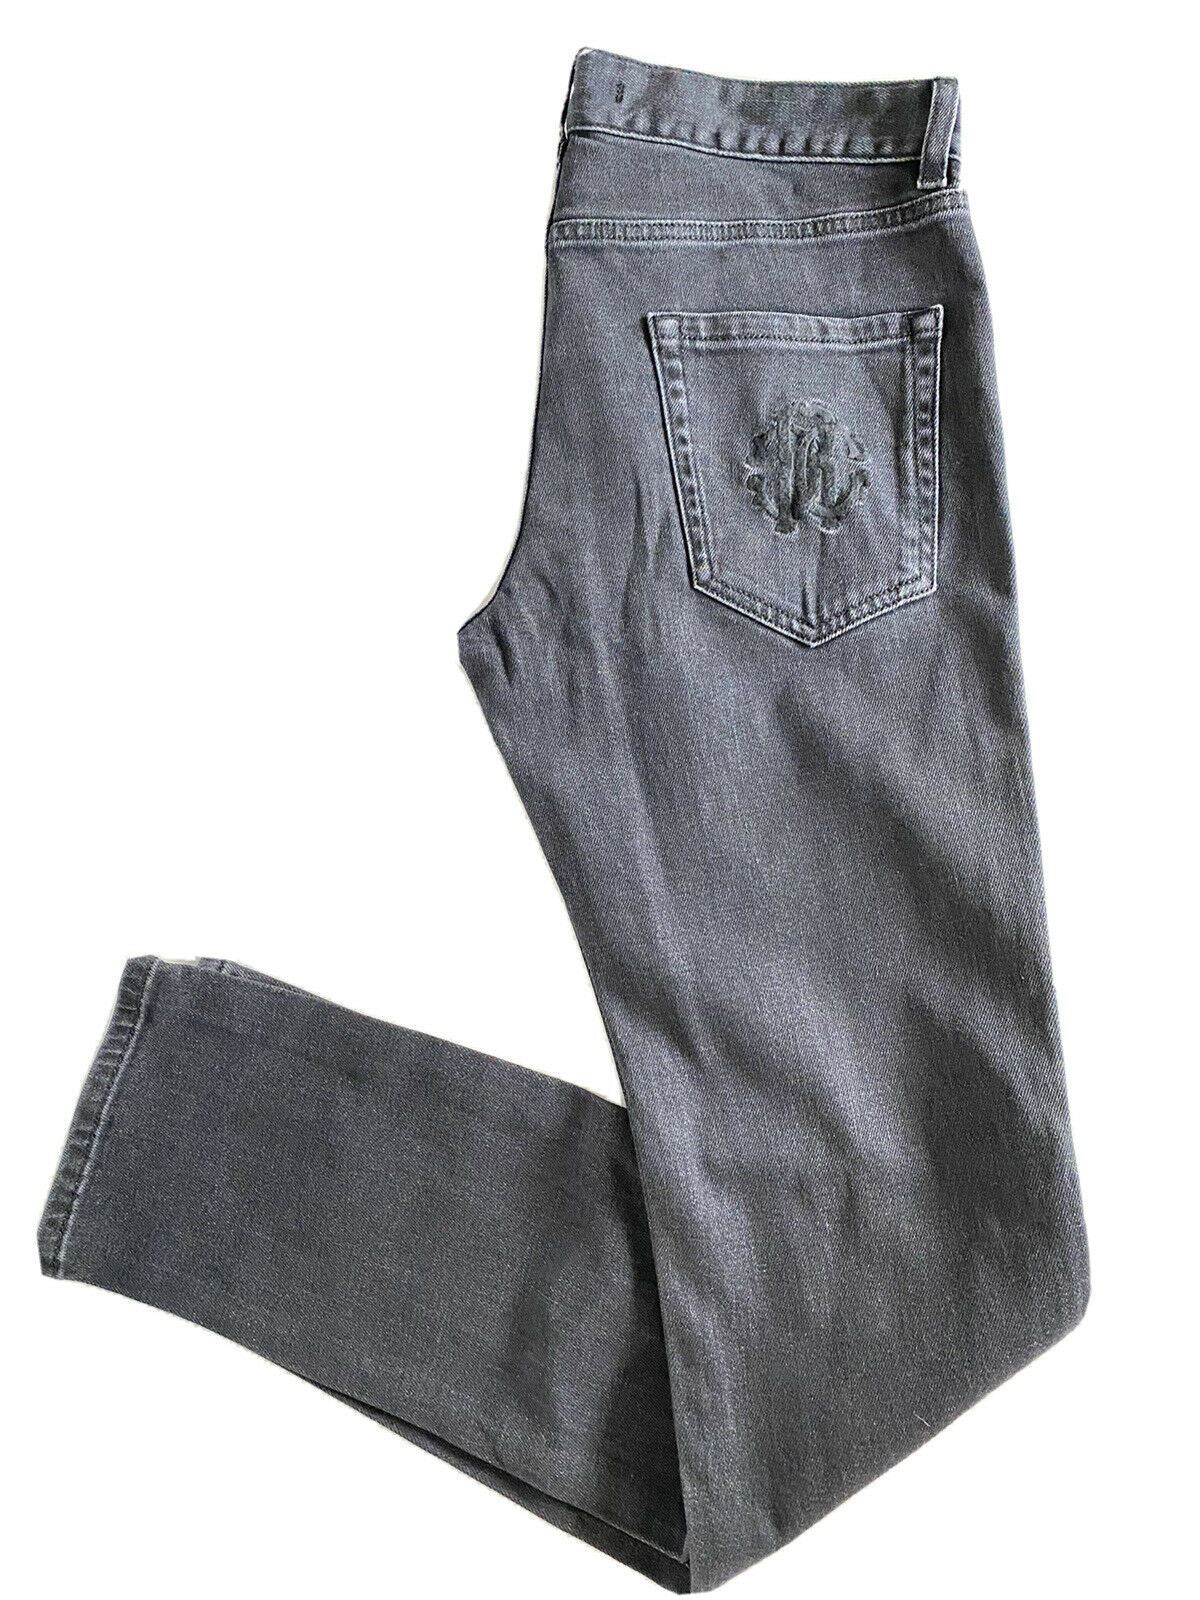 NWT $550 Roberto Cavalli Mens Gray Slim Fit Jeans Pants Size 32 US